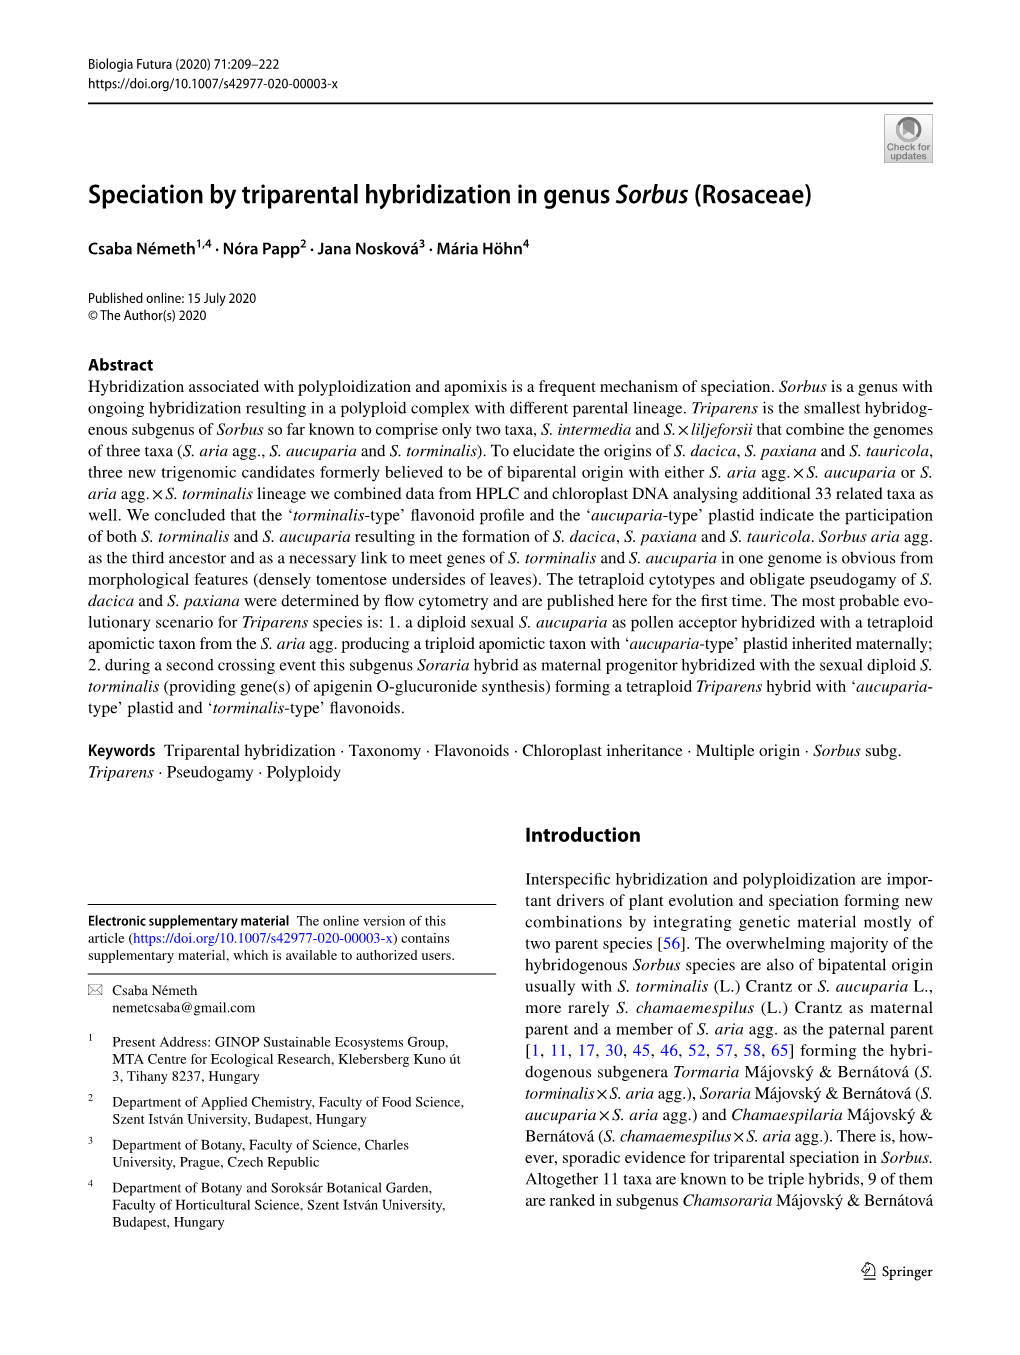 Speciation by Triparental Hybridization in Genus Sorbus (Rosaceae)